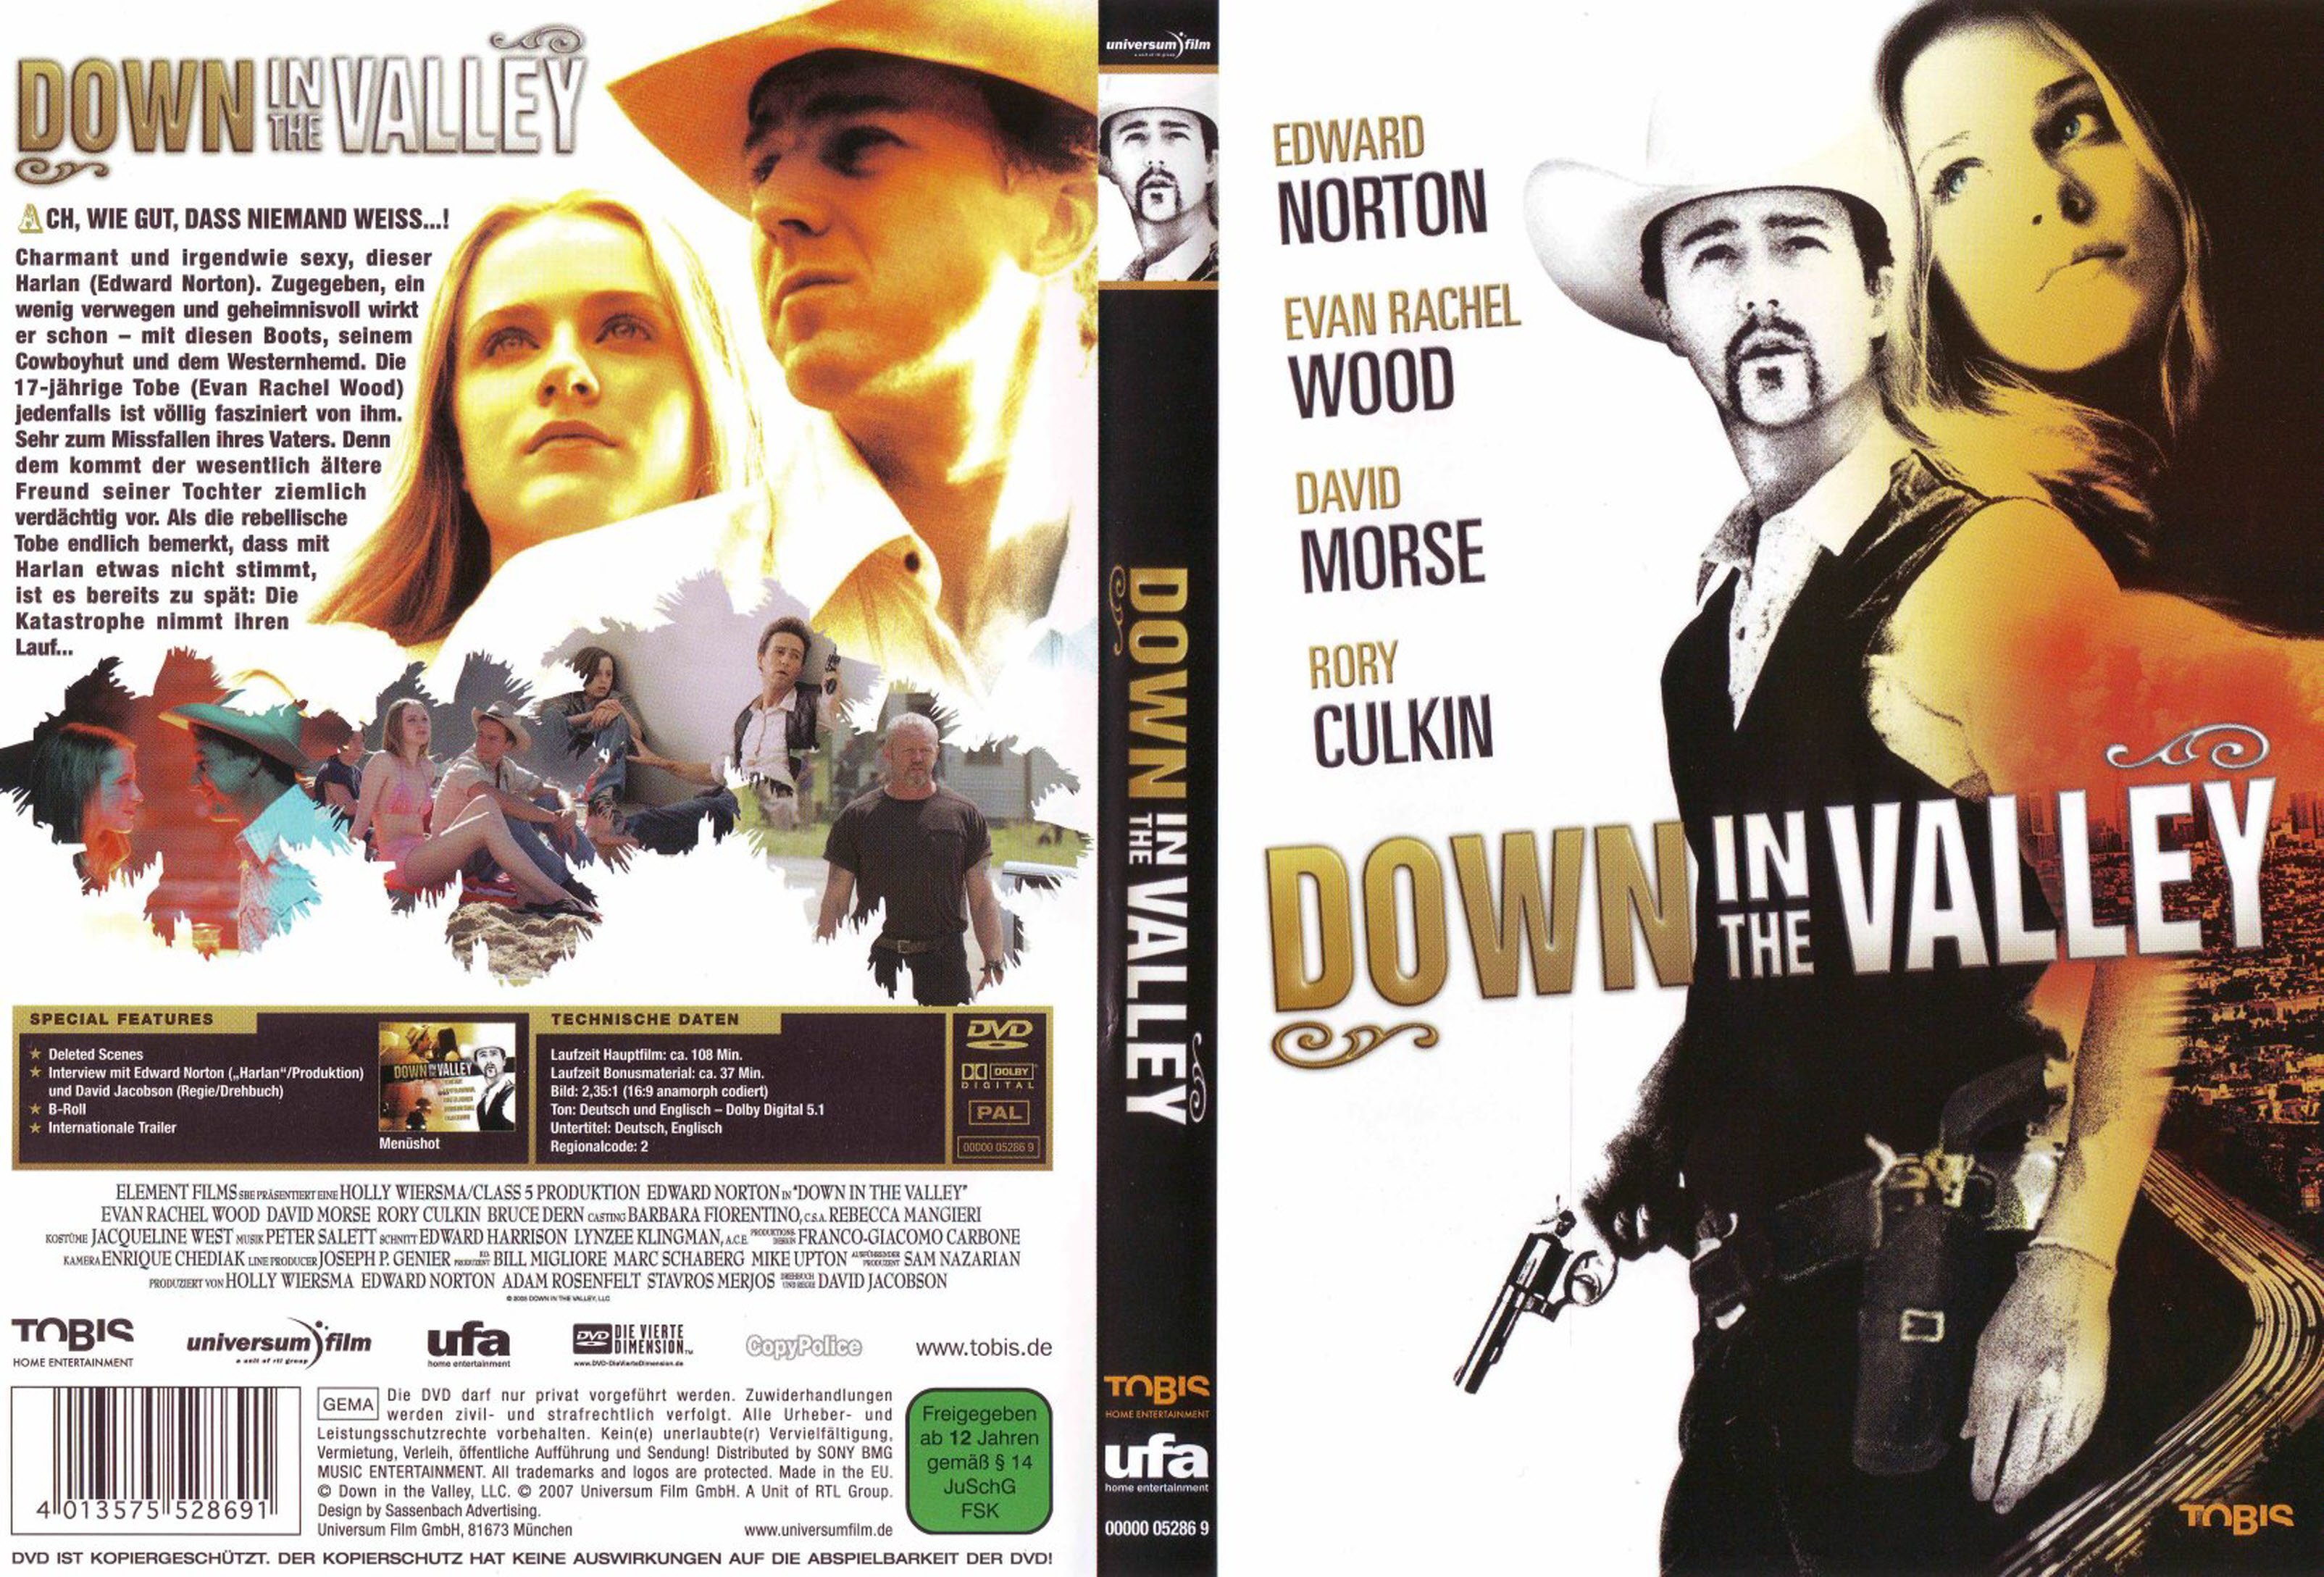 P-valley dvd